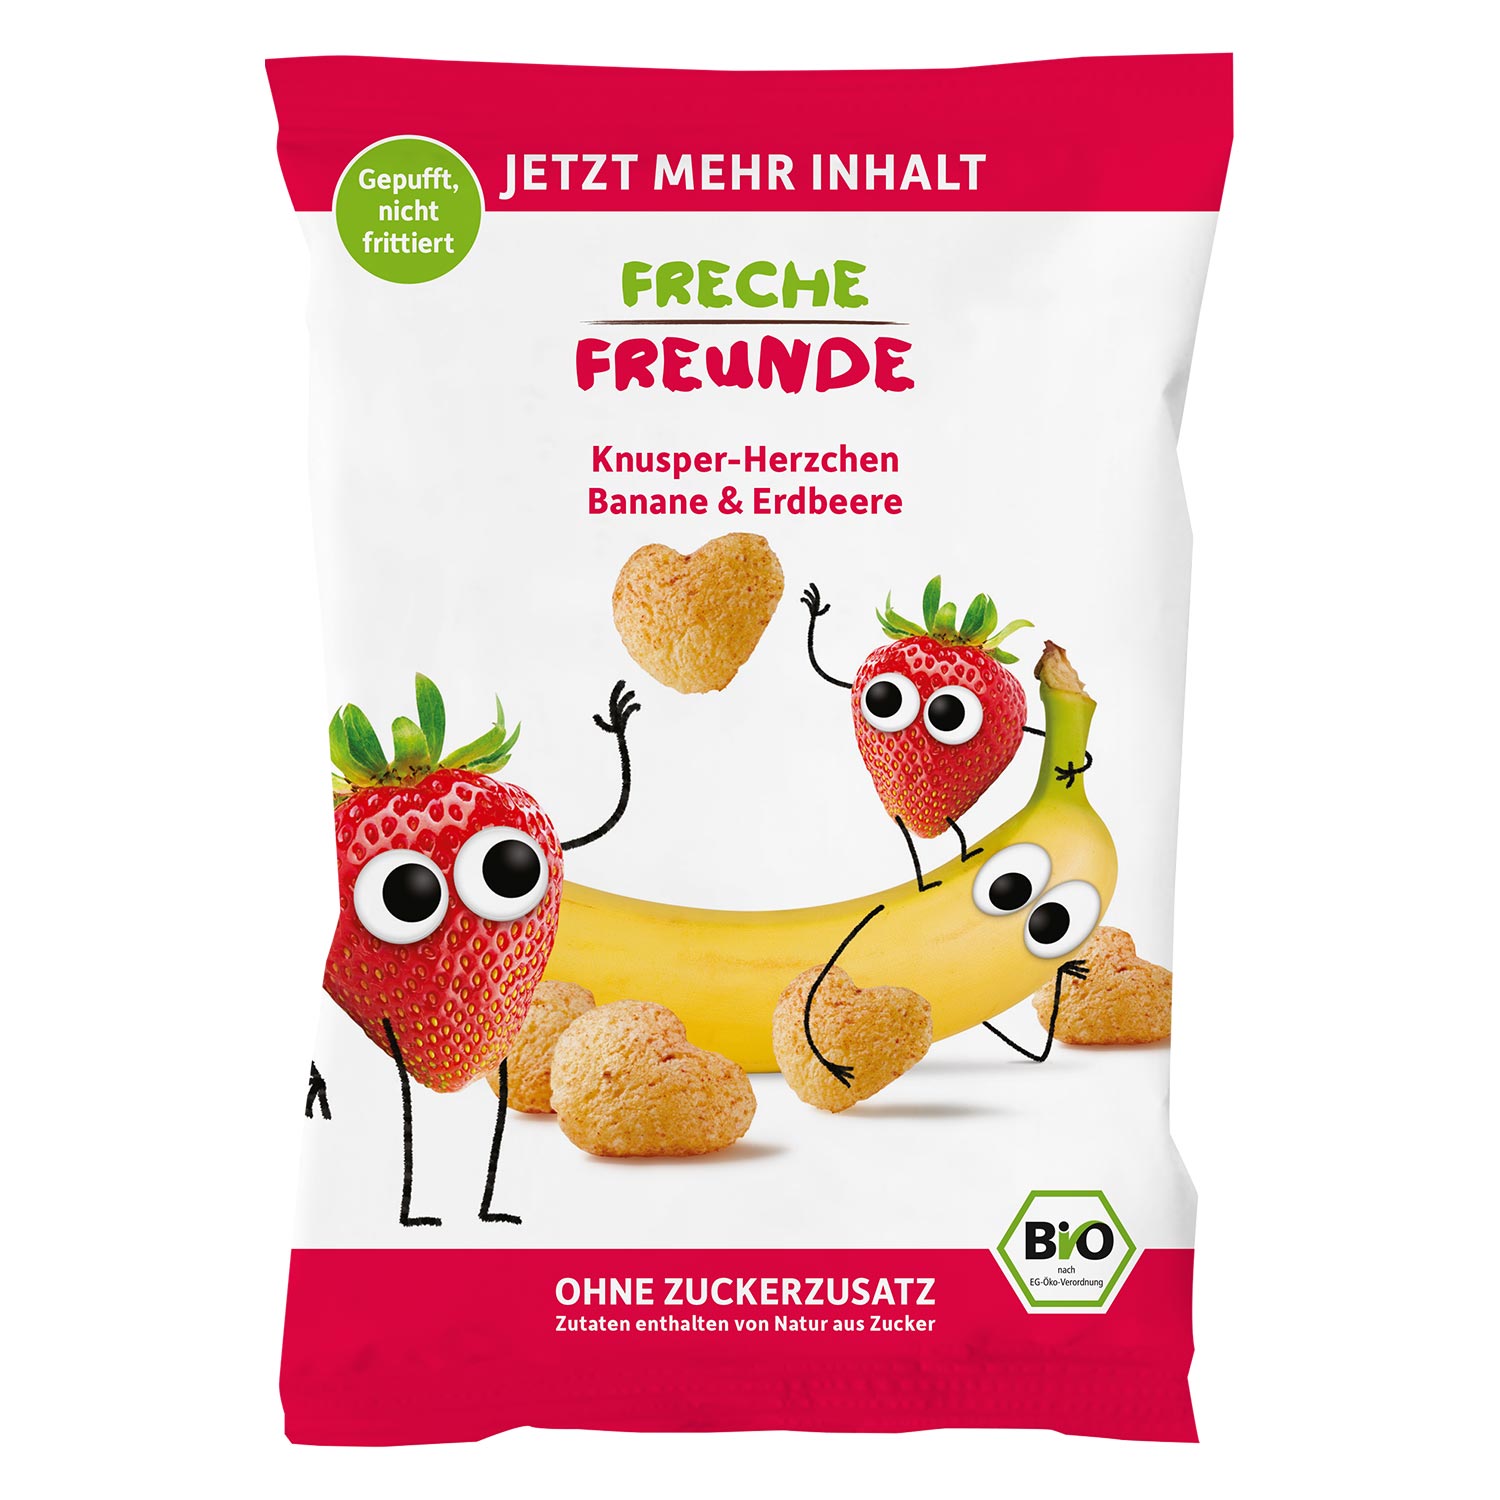 https://frechefreunde.ch/wp-content/uploads/2022/09/freche-freunde-knusper-herzchen-banane-erdbeere-1.jpg